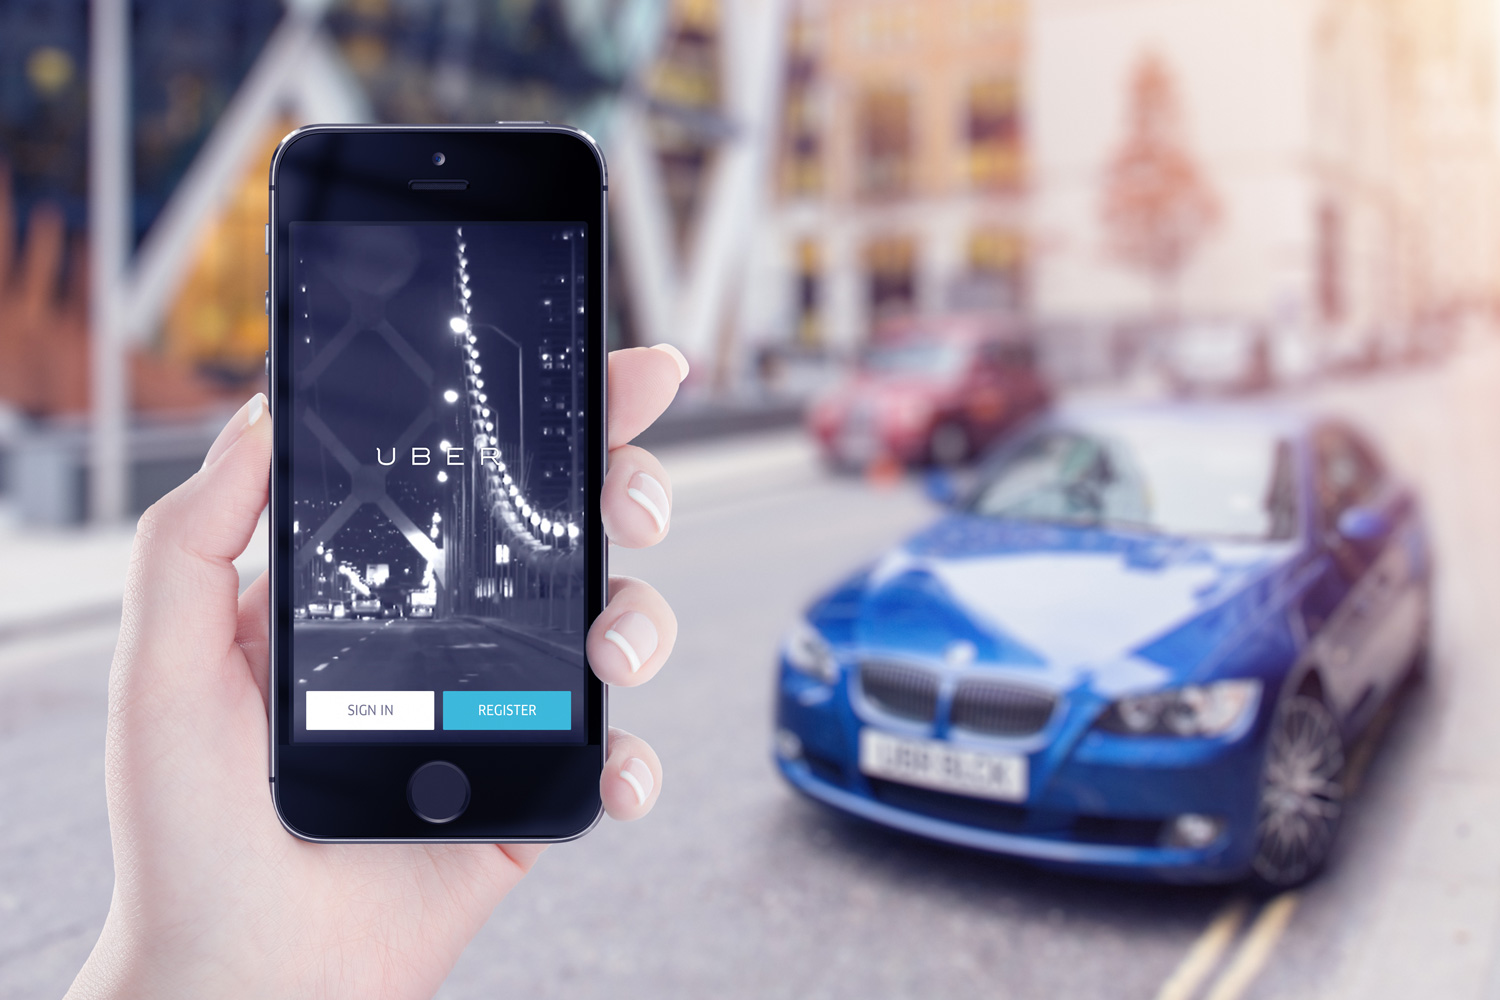 psychology people uber surge pricing smartphone ridesharing app